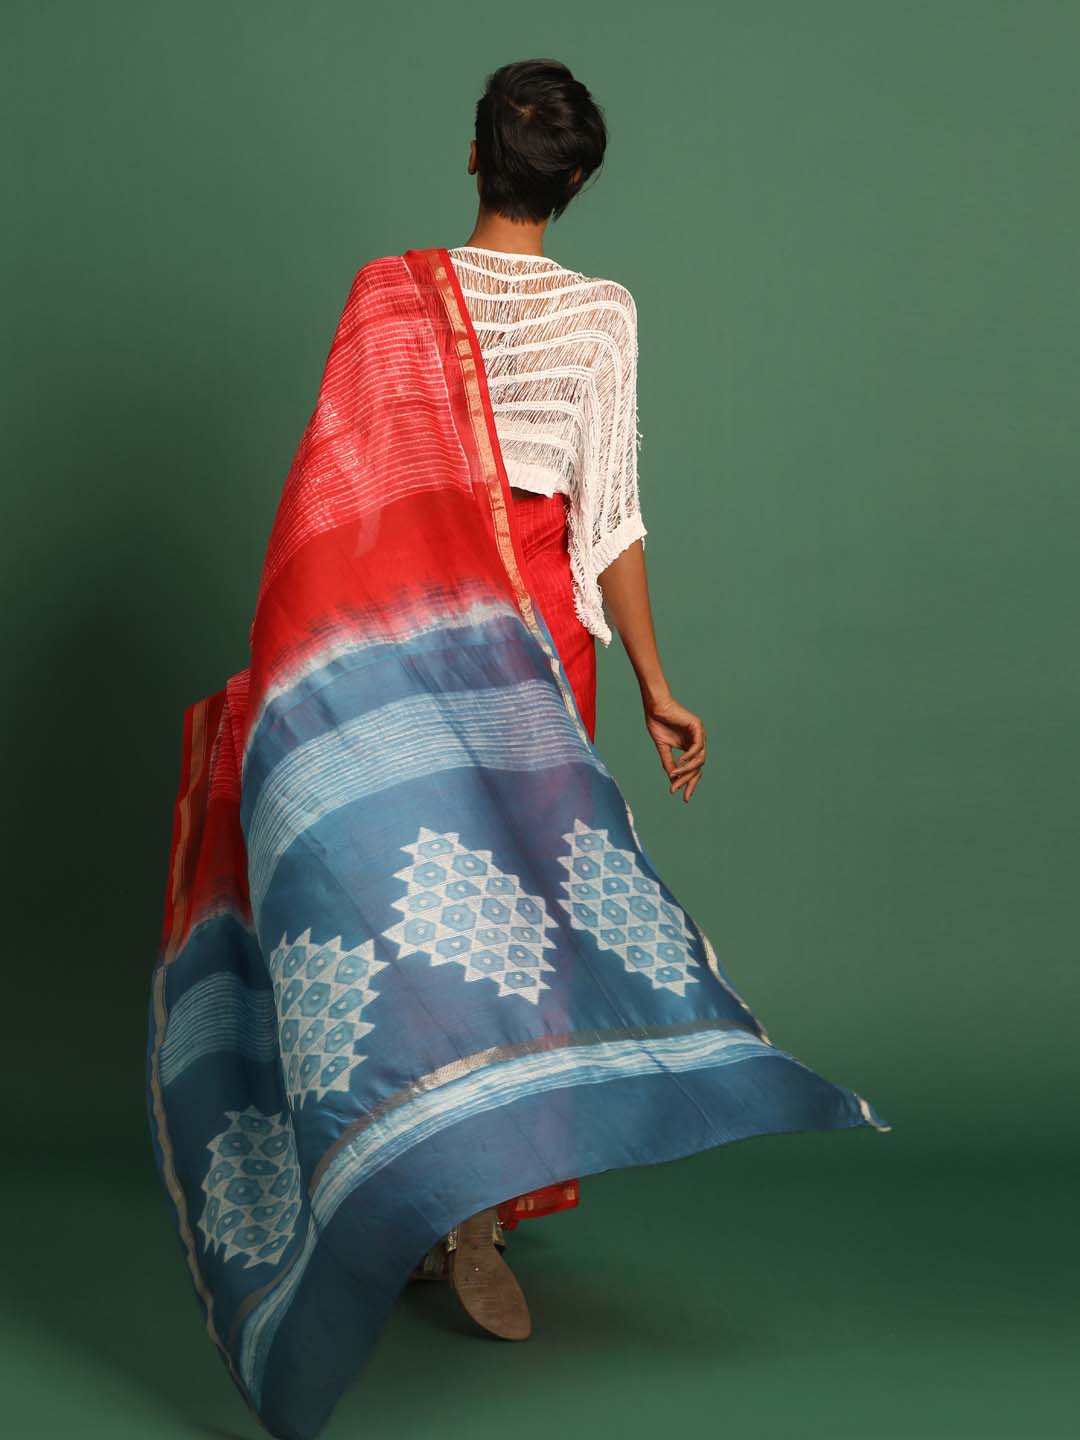 Indethnic Shibori Silk Cotton Saree in Red - View 3